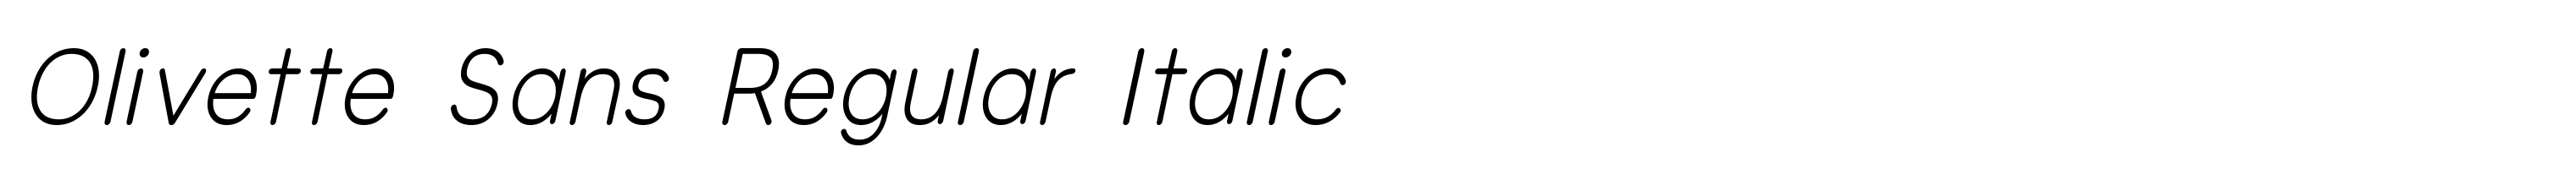 Olivette Sans Regular Italic